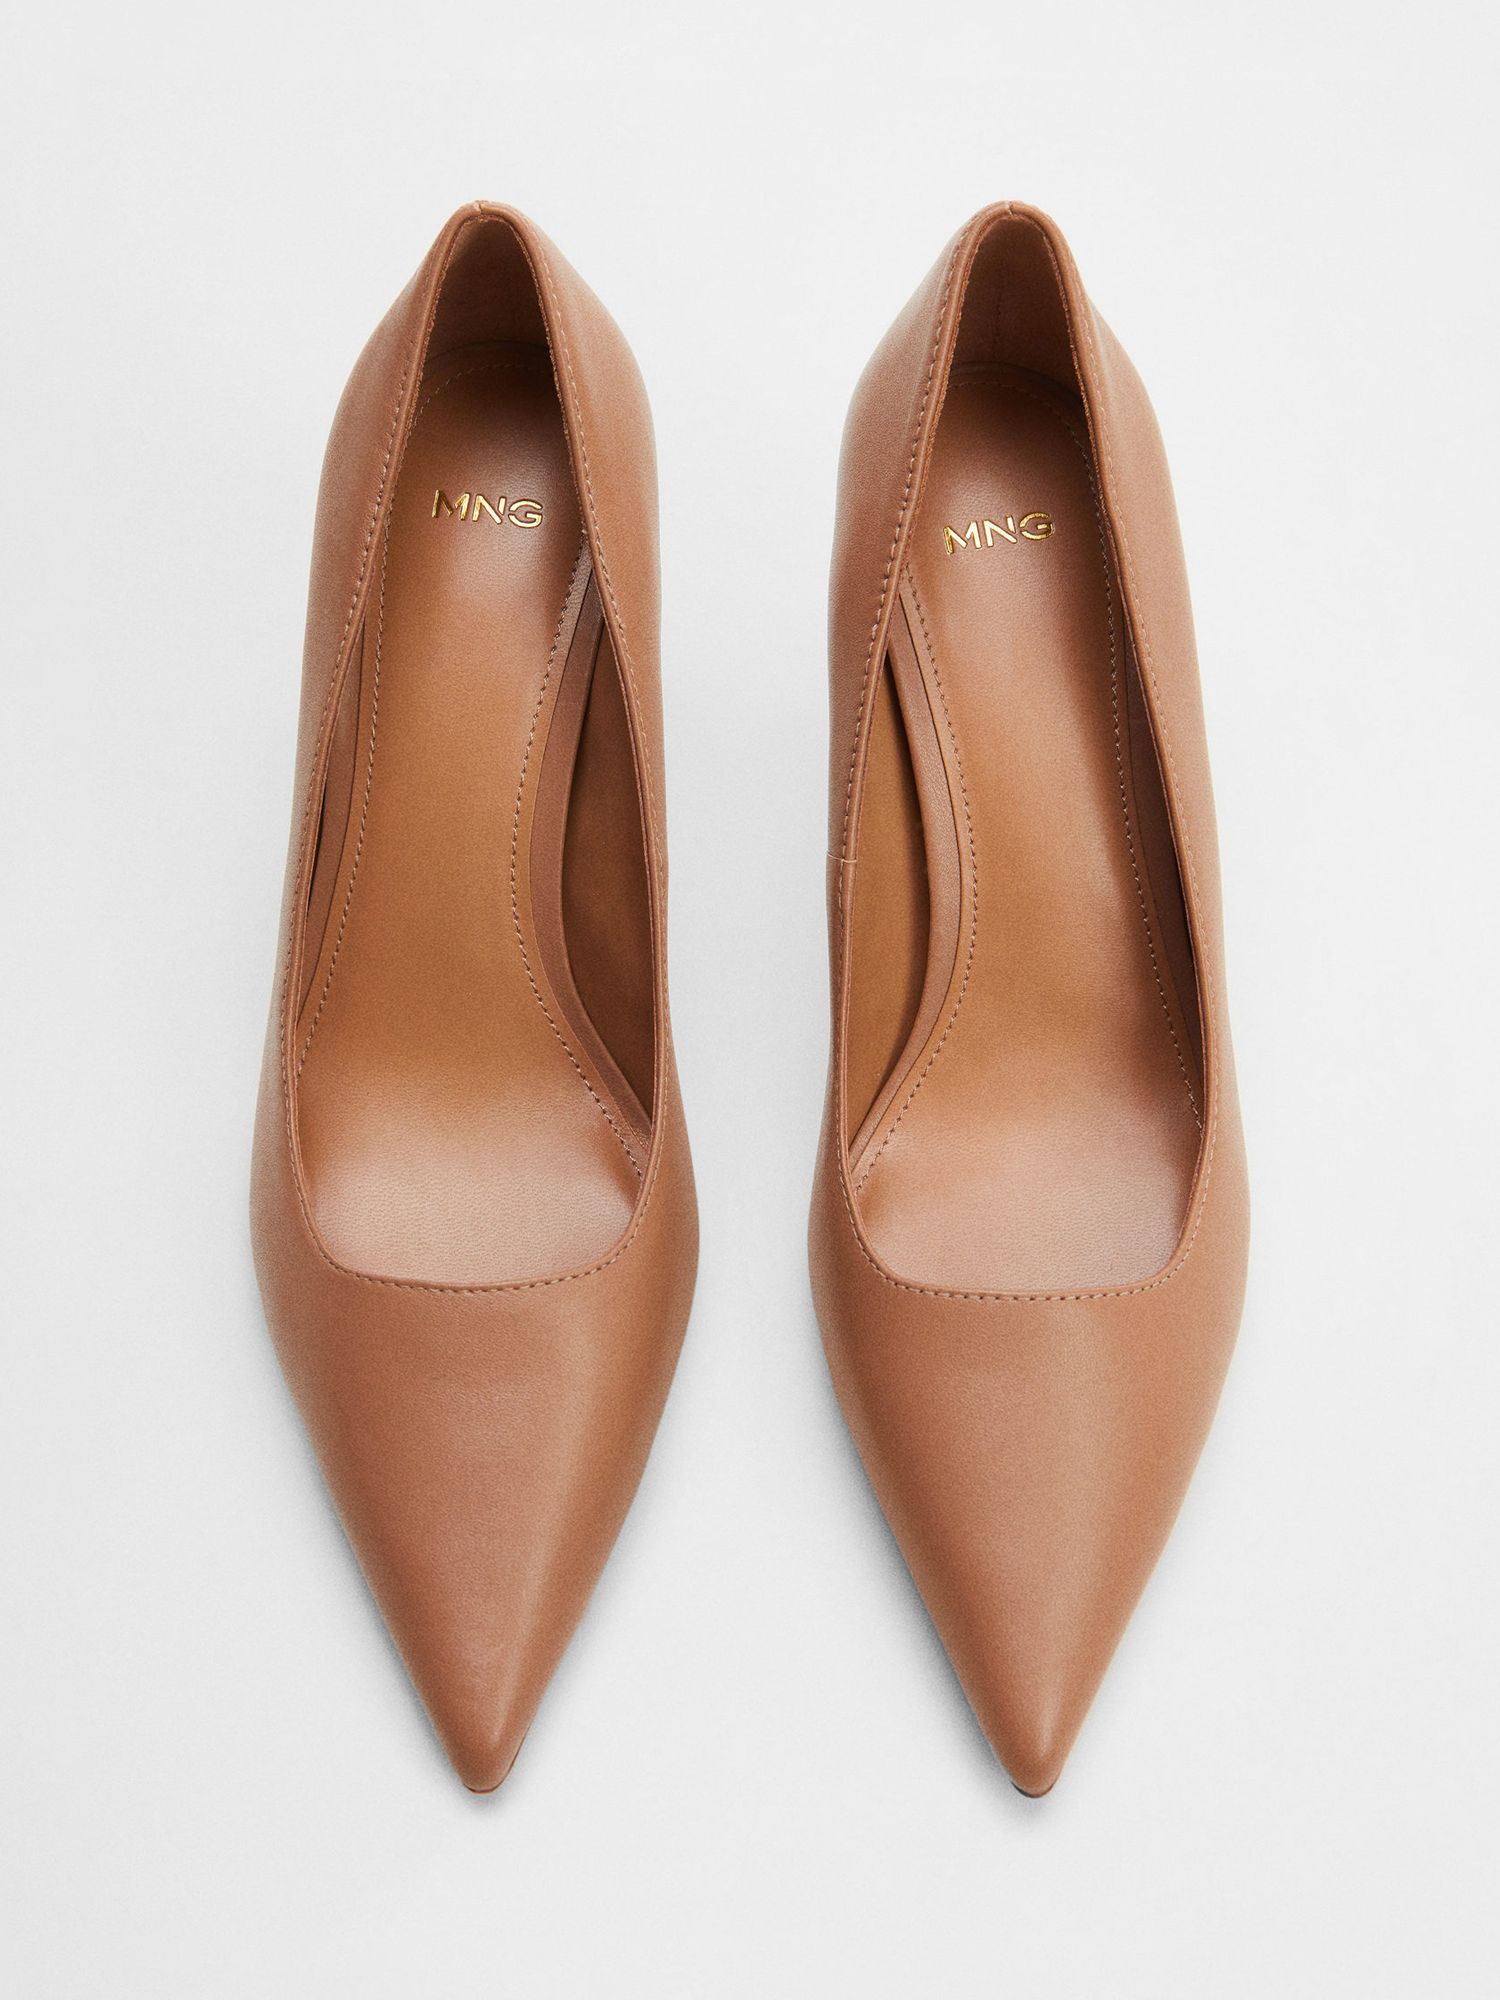 Mango Leather Heel Court Shoes, Medium Brown, 6